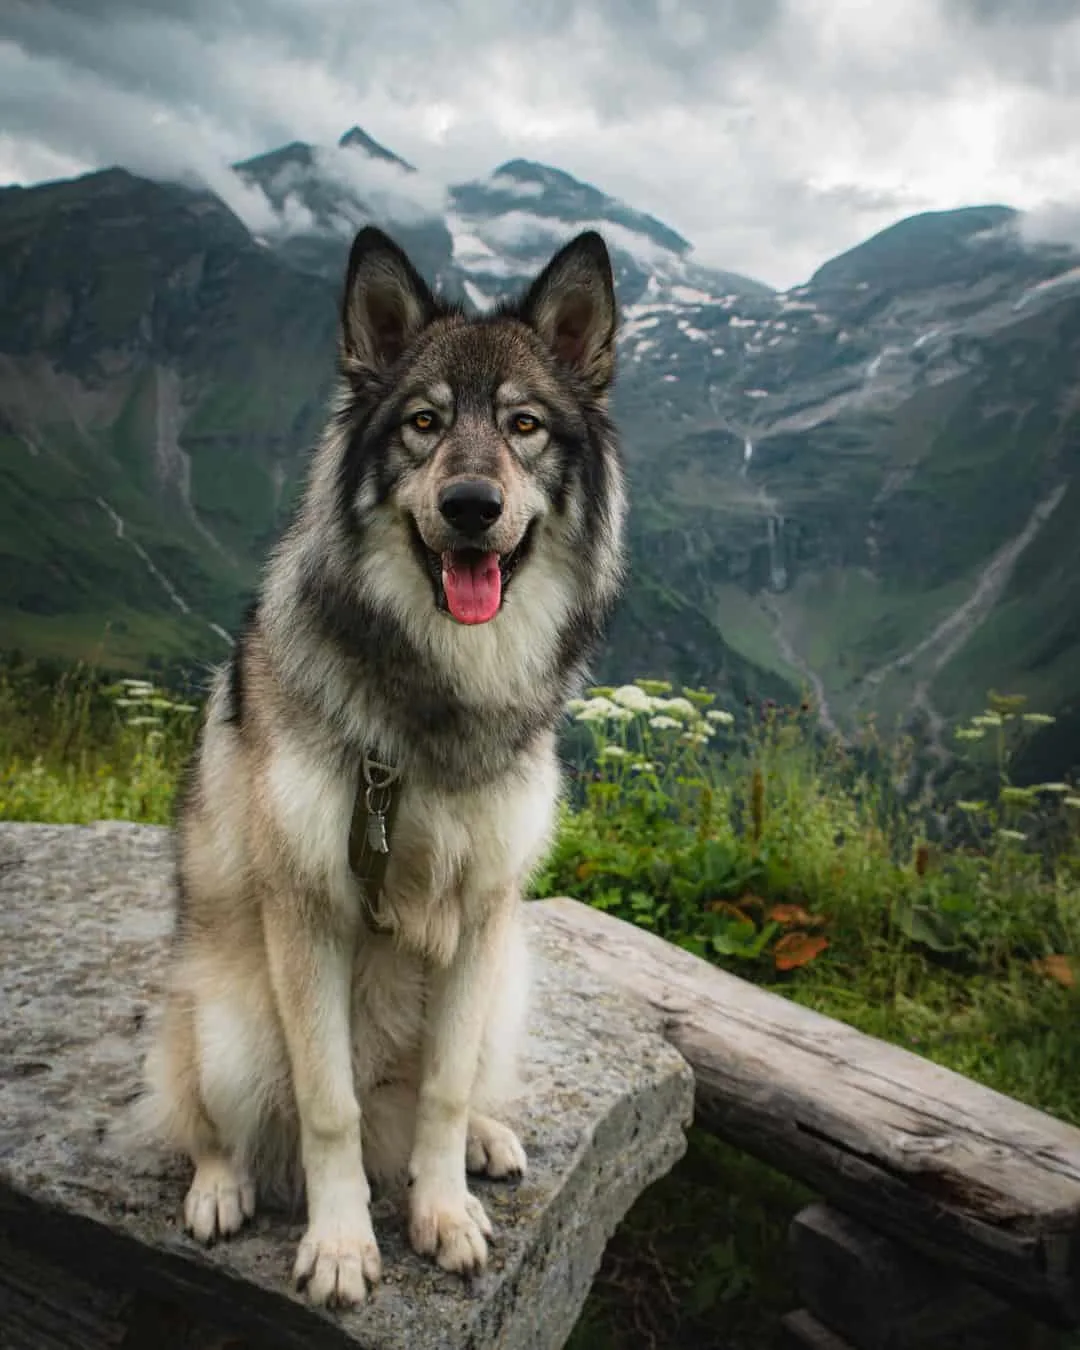 Wolfdog is sitting on a rock